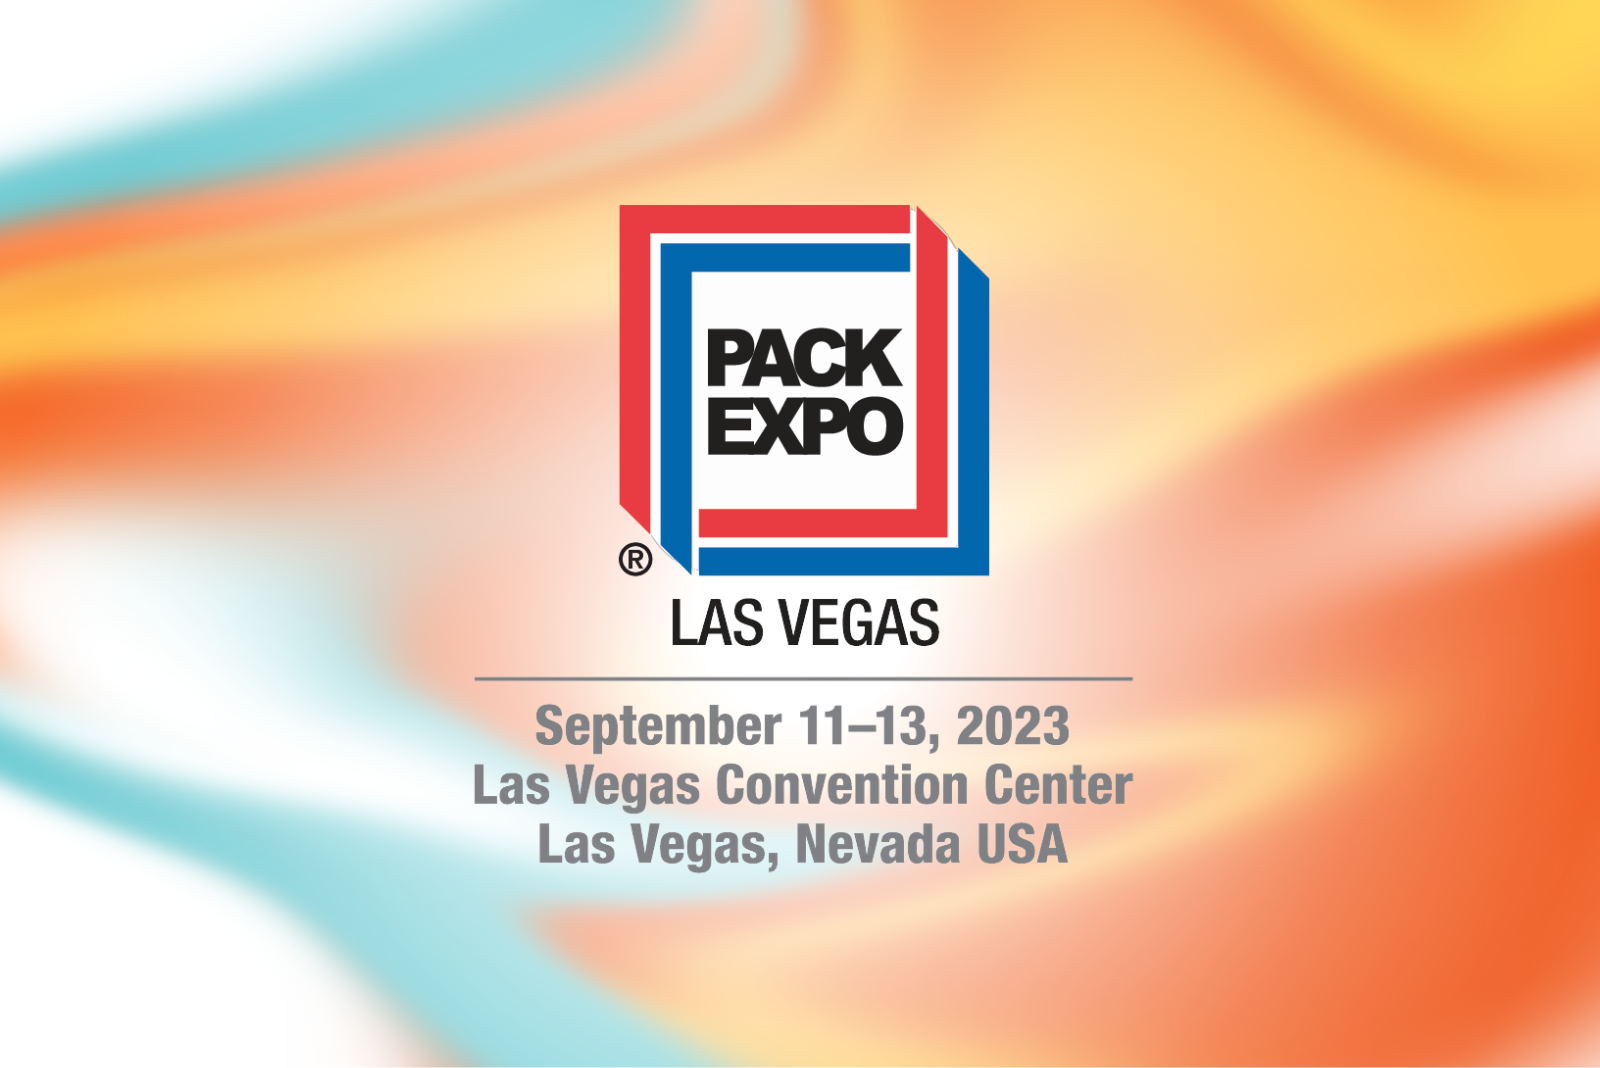 Pack Expo Las Vegas 2023 set for largest attendance Commercial Baking